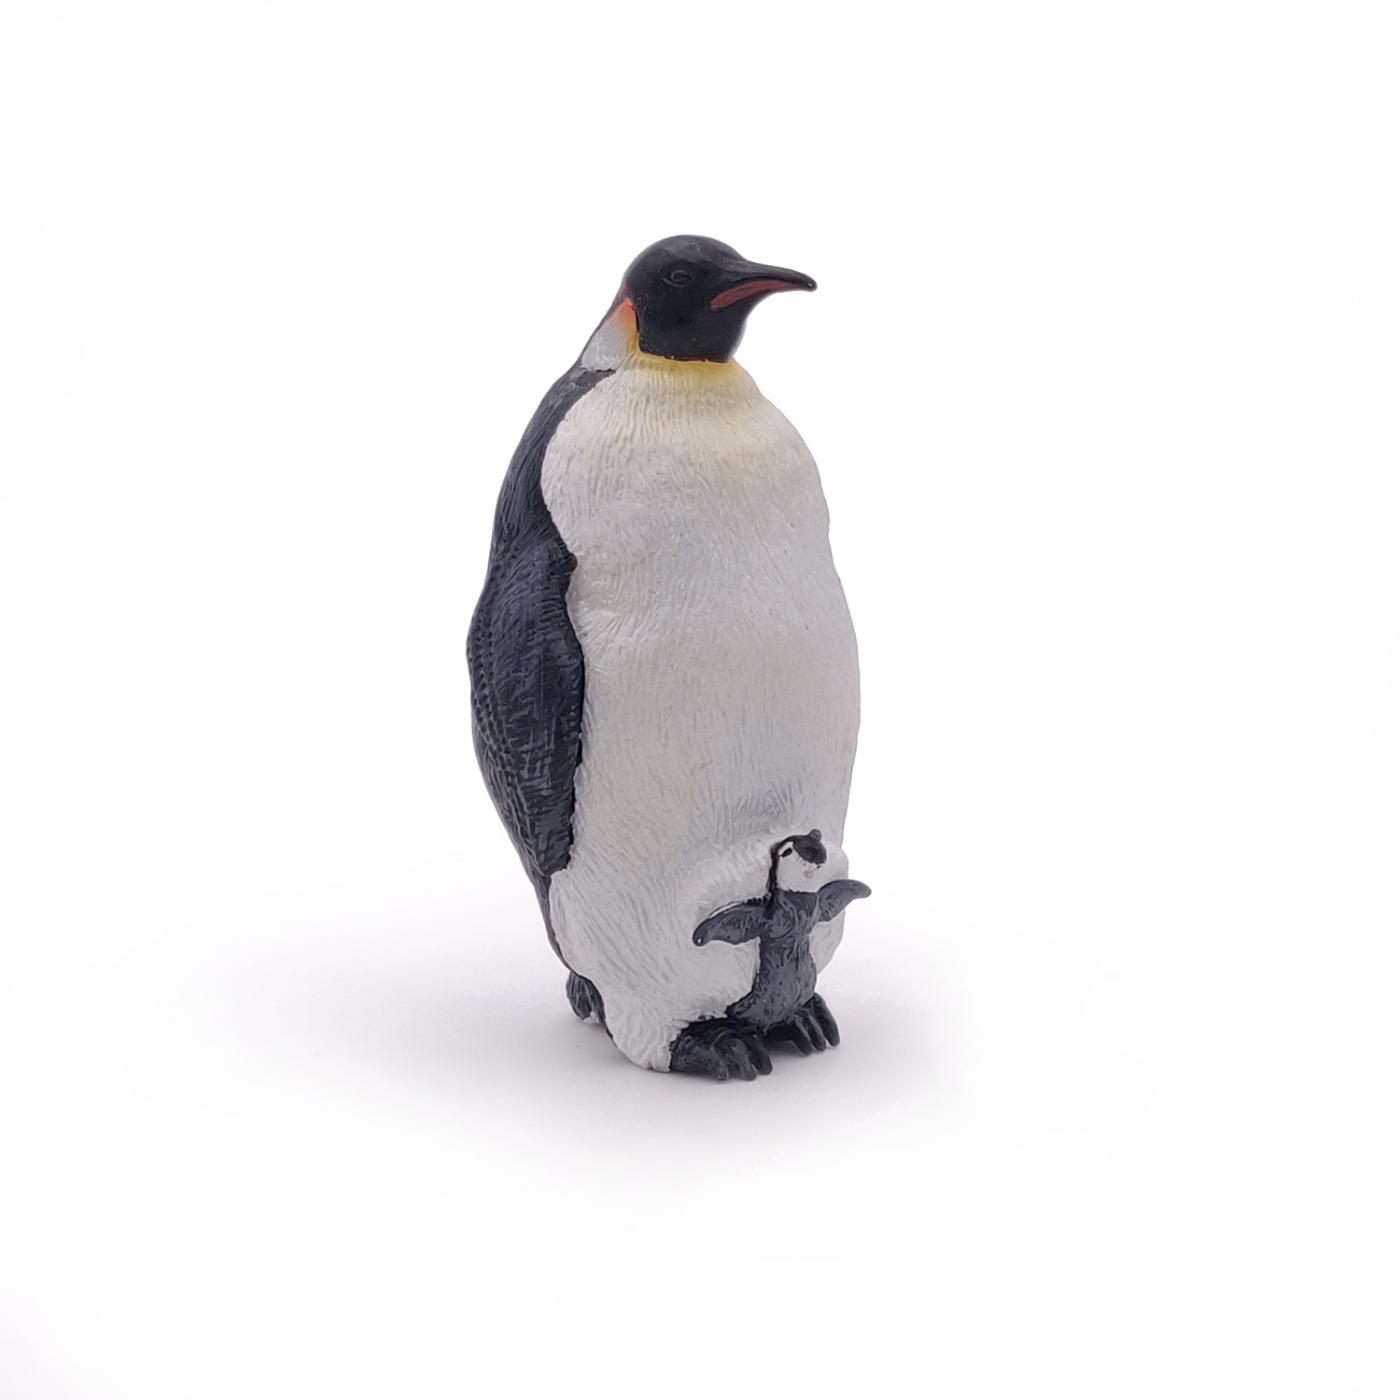 Papo 50033 Emperor Penguin Marine Animal Figure for sale online